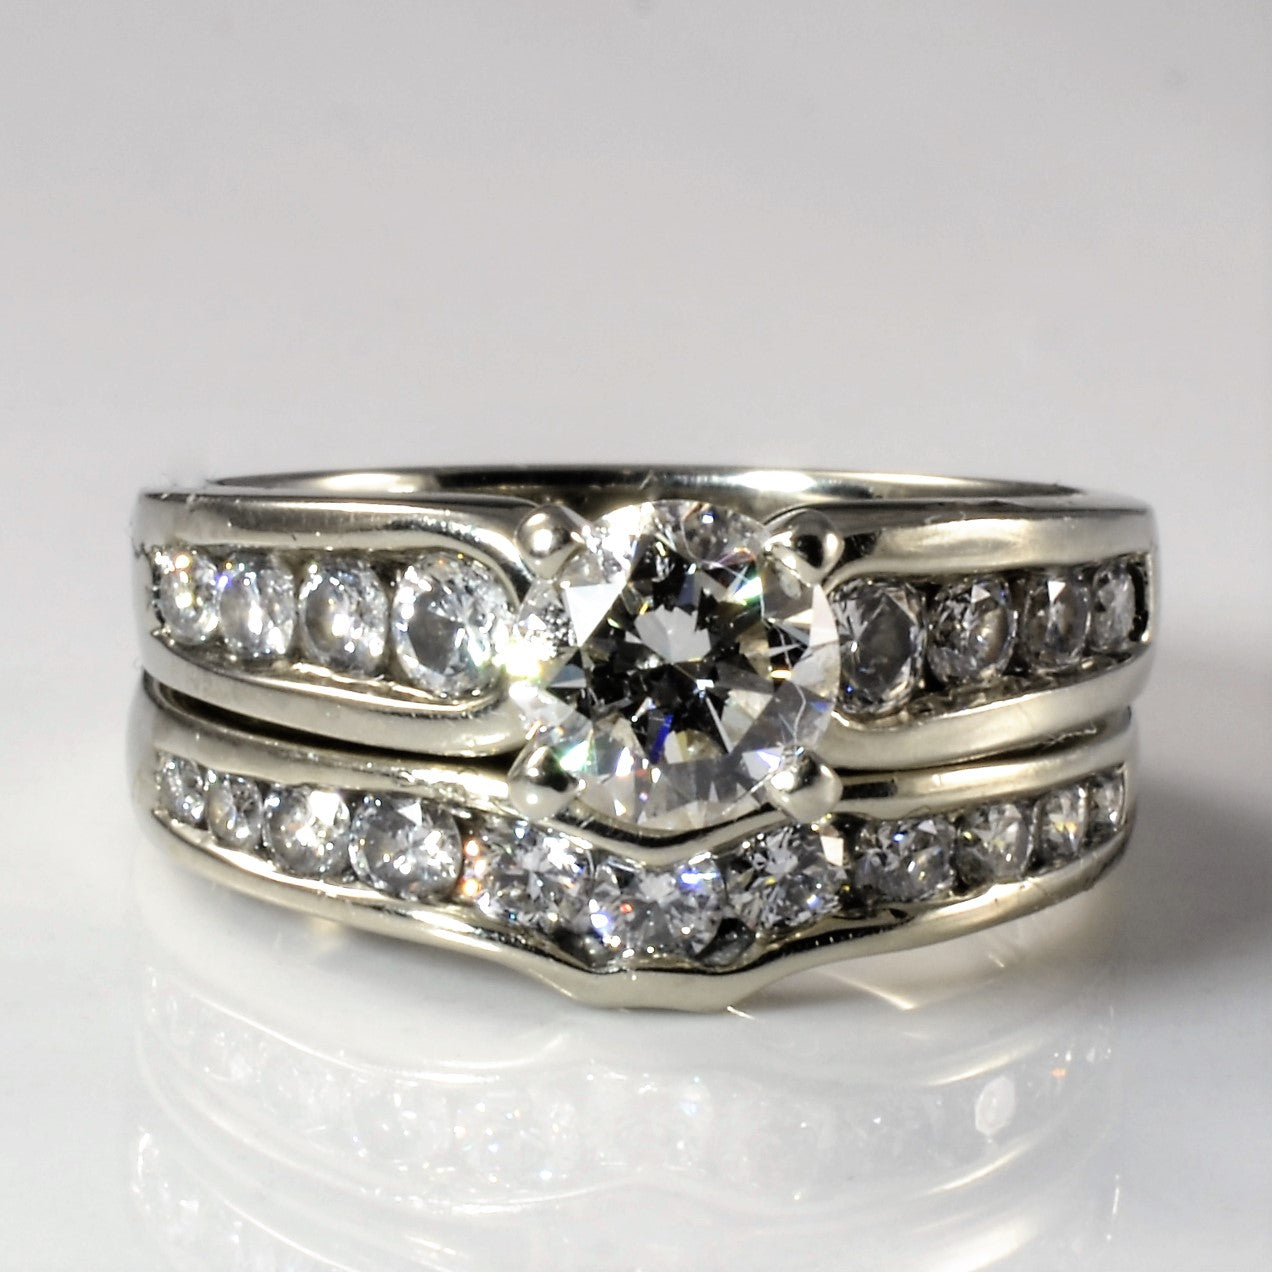 Spence Diamonds' Classic Diamond Wedding Set | 1.54ctw | SZ 5.5 |